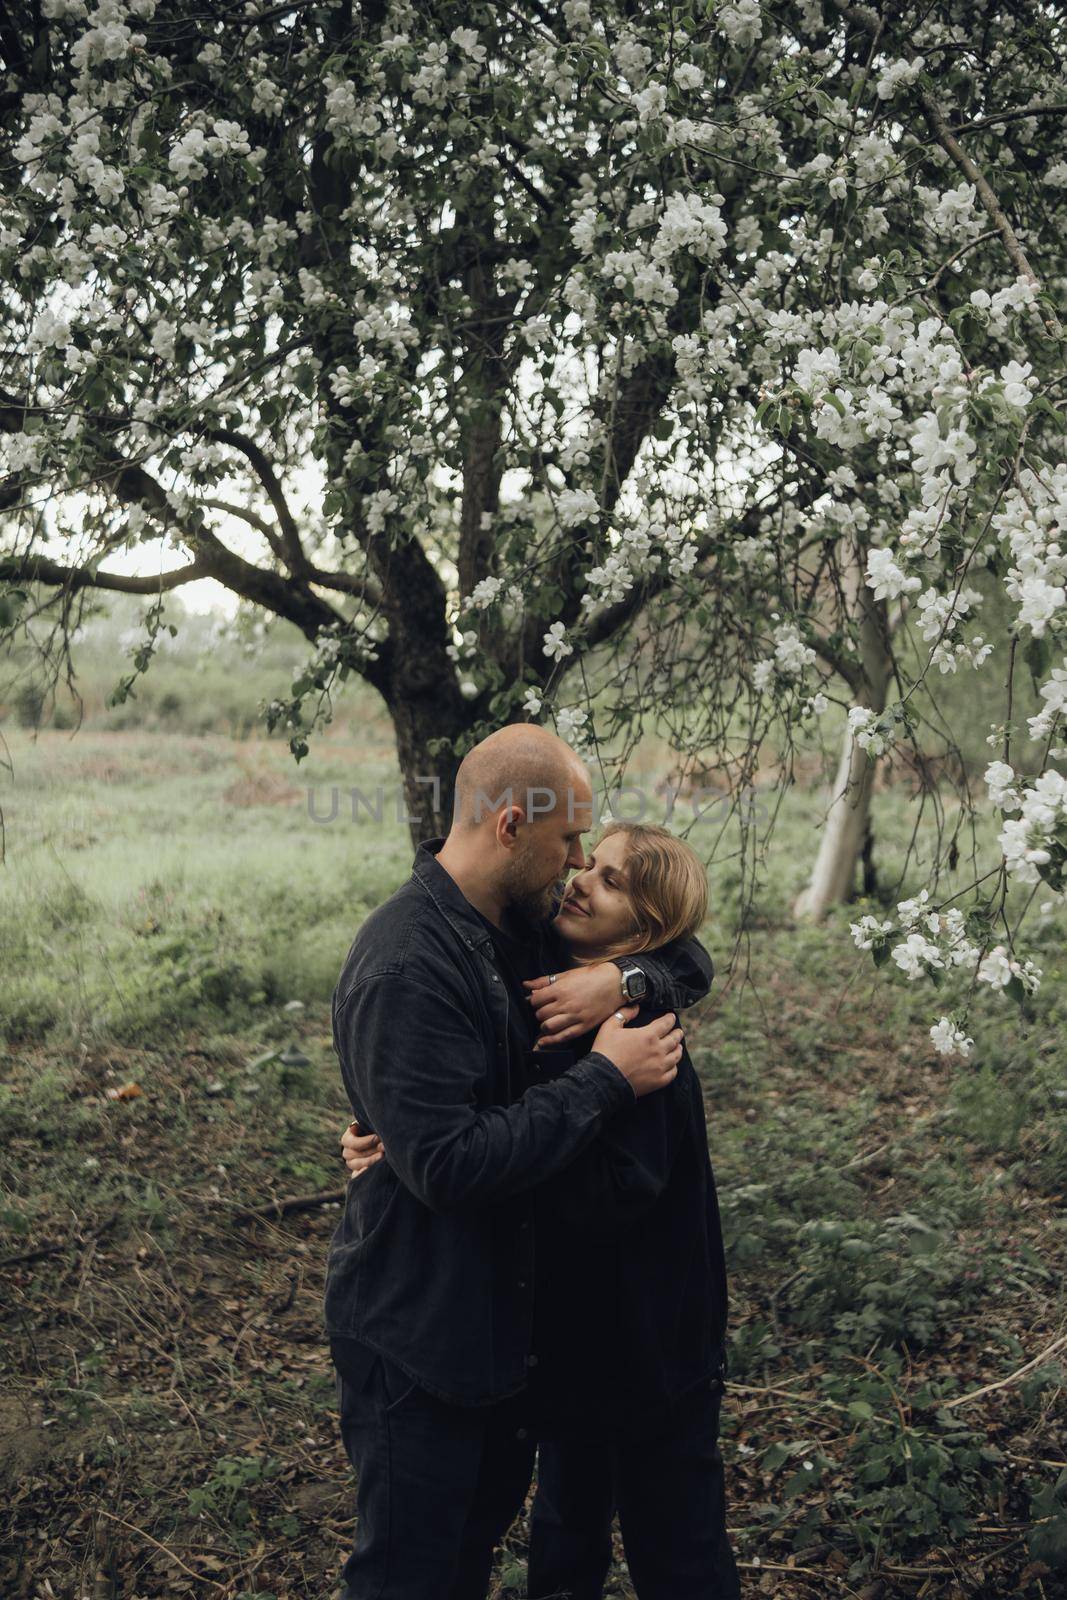 lovers embrace under a flowering tree hiding from the rain by Symonenko